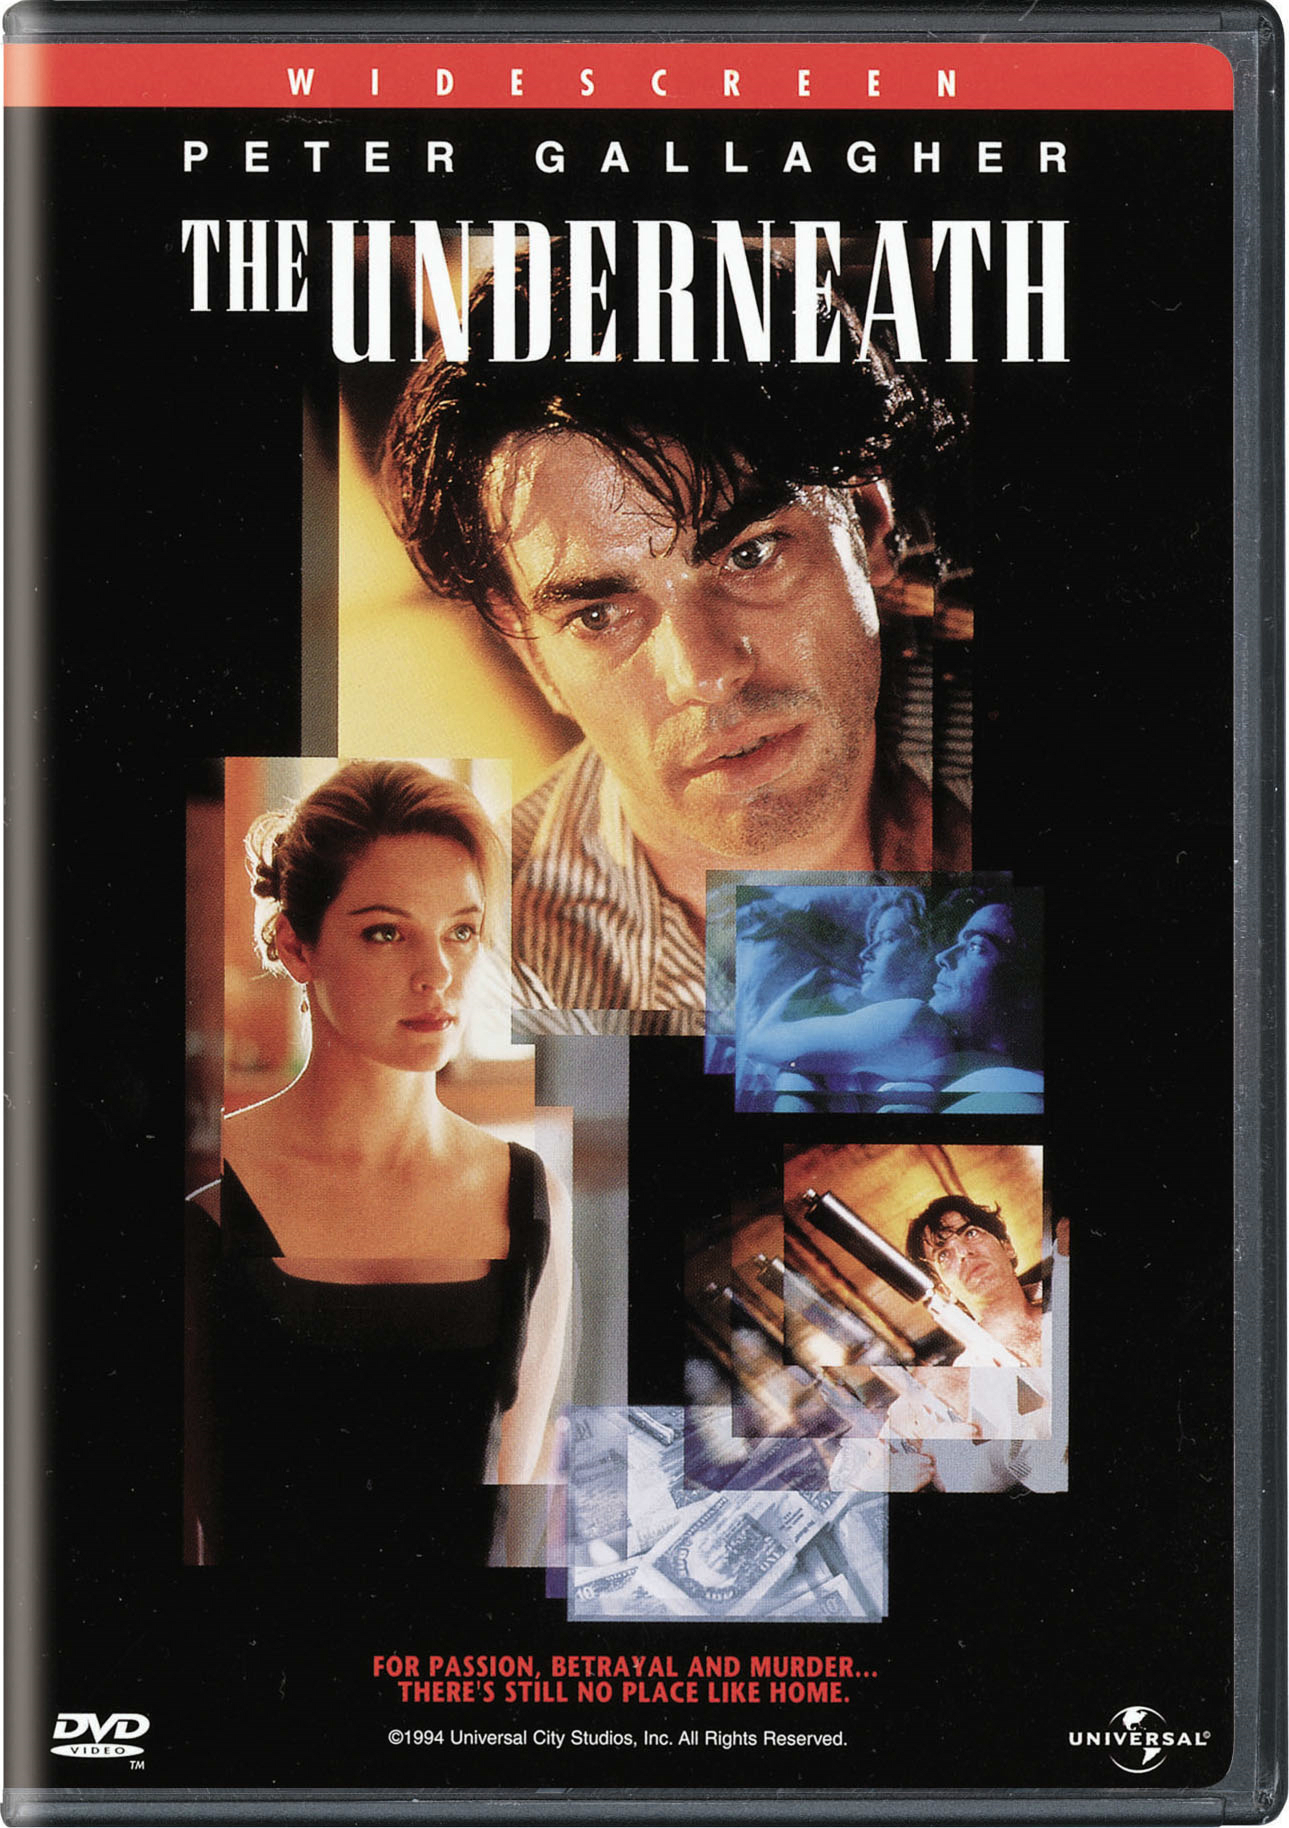 The Underneath - DVD [ 1995 ]  - Thriller Movies On DVD - Movies On GRUV